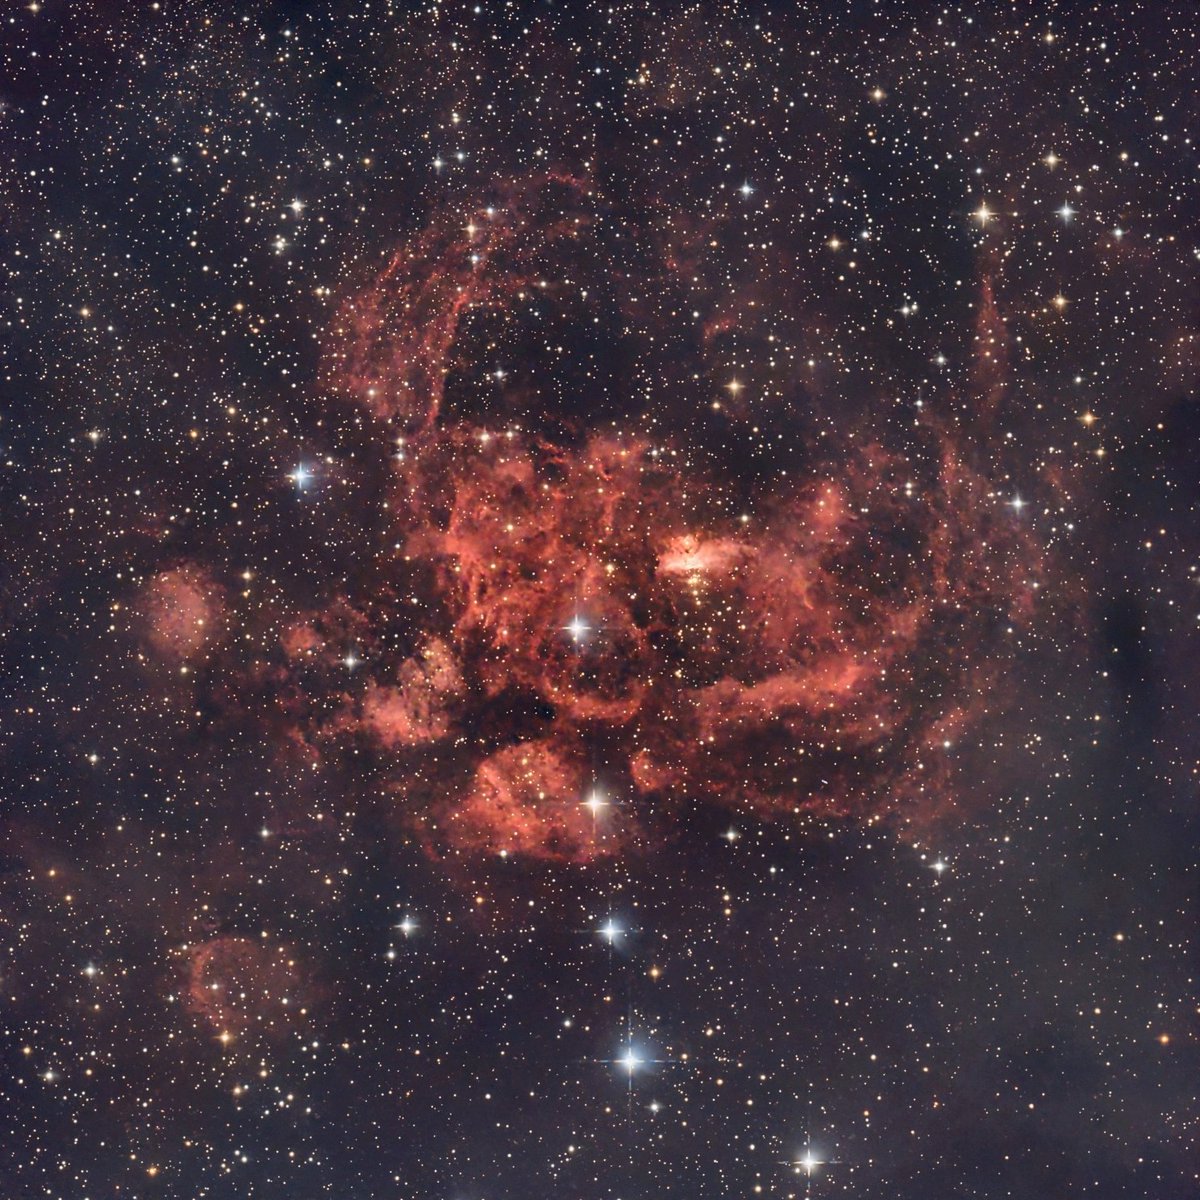 NGC6357 彼岸花星雲を初めて撮影しました
高度も低くて綺麗に写すのは難しい対象ですね💦
露出時間が短いのでもう少し撮り増ししたいです

NGC6357 彼岸花星雲
2024/5/10
23:40～24:40頃
千葉県いすみ市
Sky Watcher Quattro150P＋コマコレクター
Vixen GPD
ZWO ASI 533MC Pro
Gain100
-10℃
60sec×60